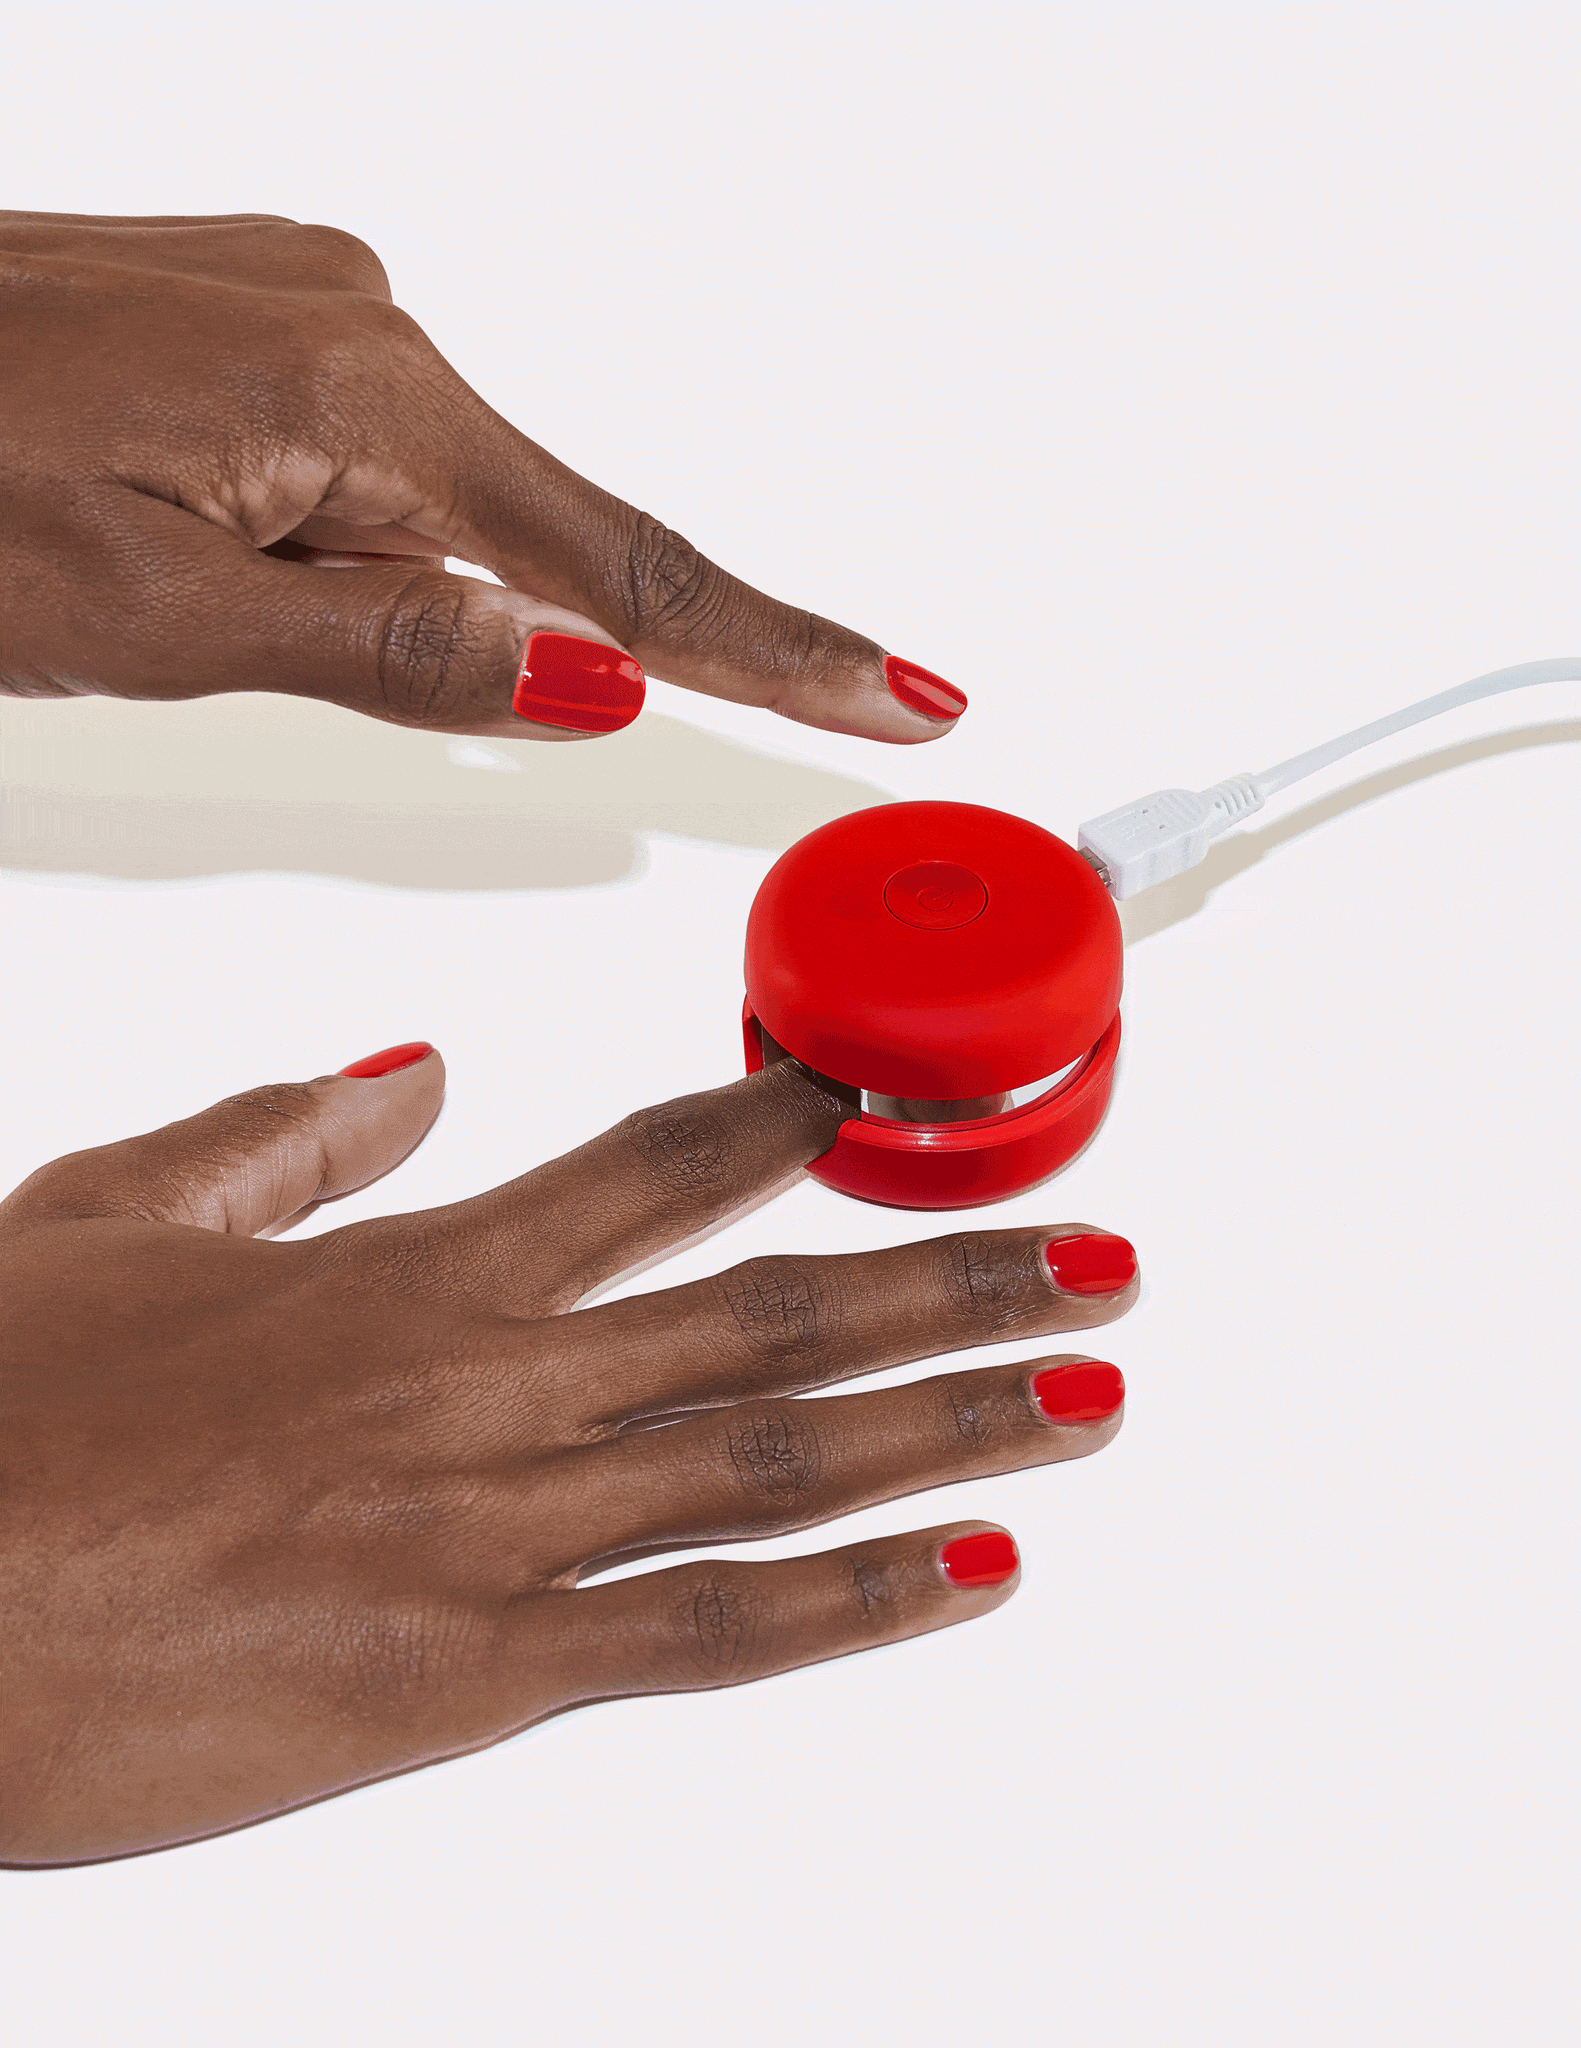 Le Mini Macaron Gel Manicure Kit Cherry Red kit di cosmetici VII